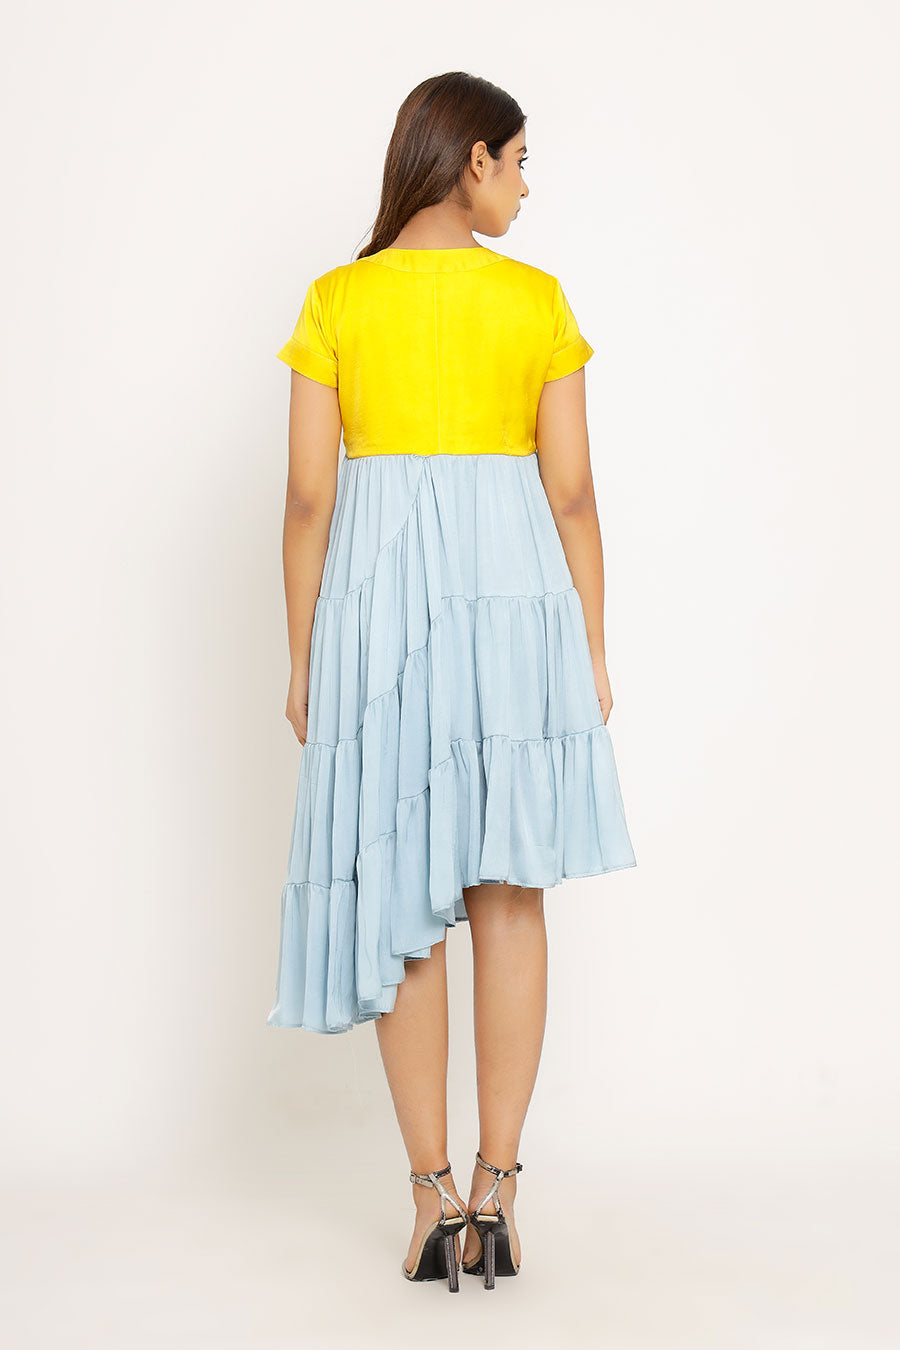 Yellow & Ice Blue Asymmetrical Dress